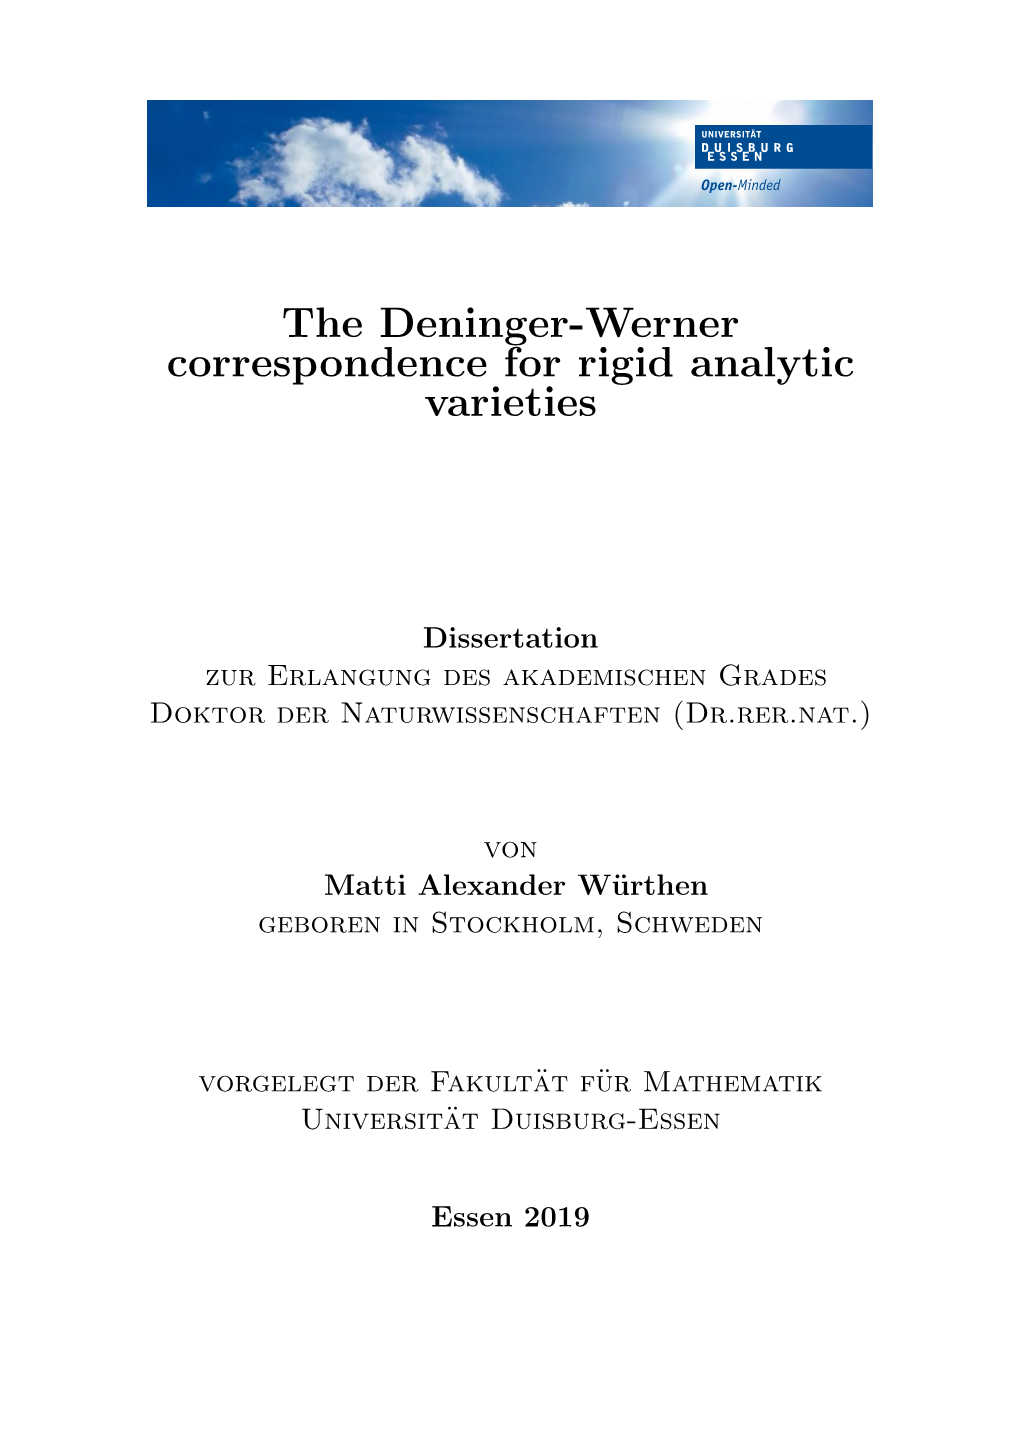 The Deninger-Werner Correspondence for Rigid Analytic Varieties